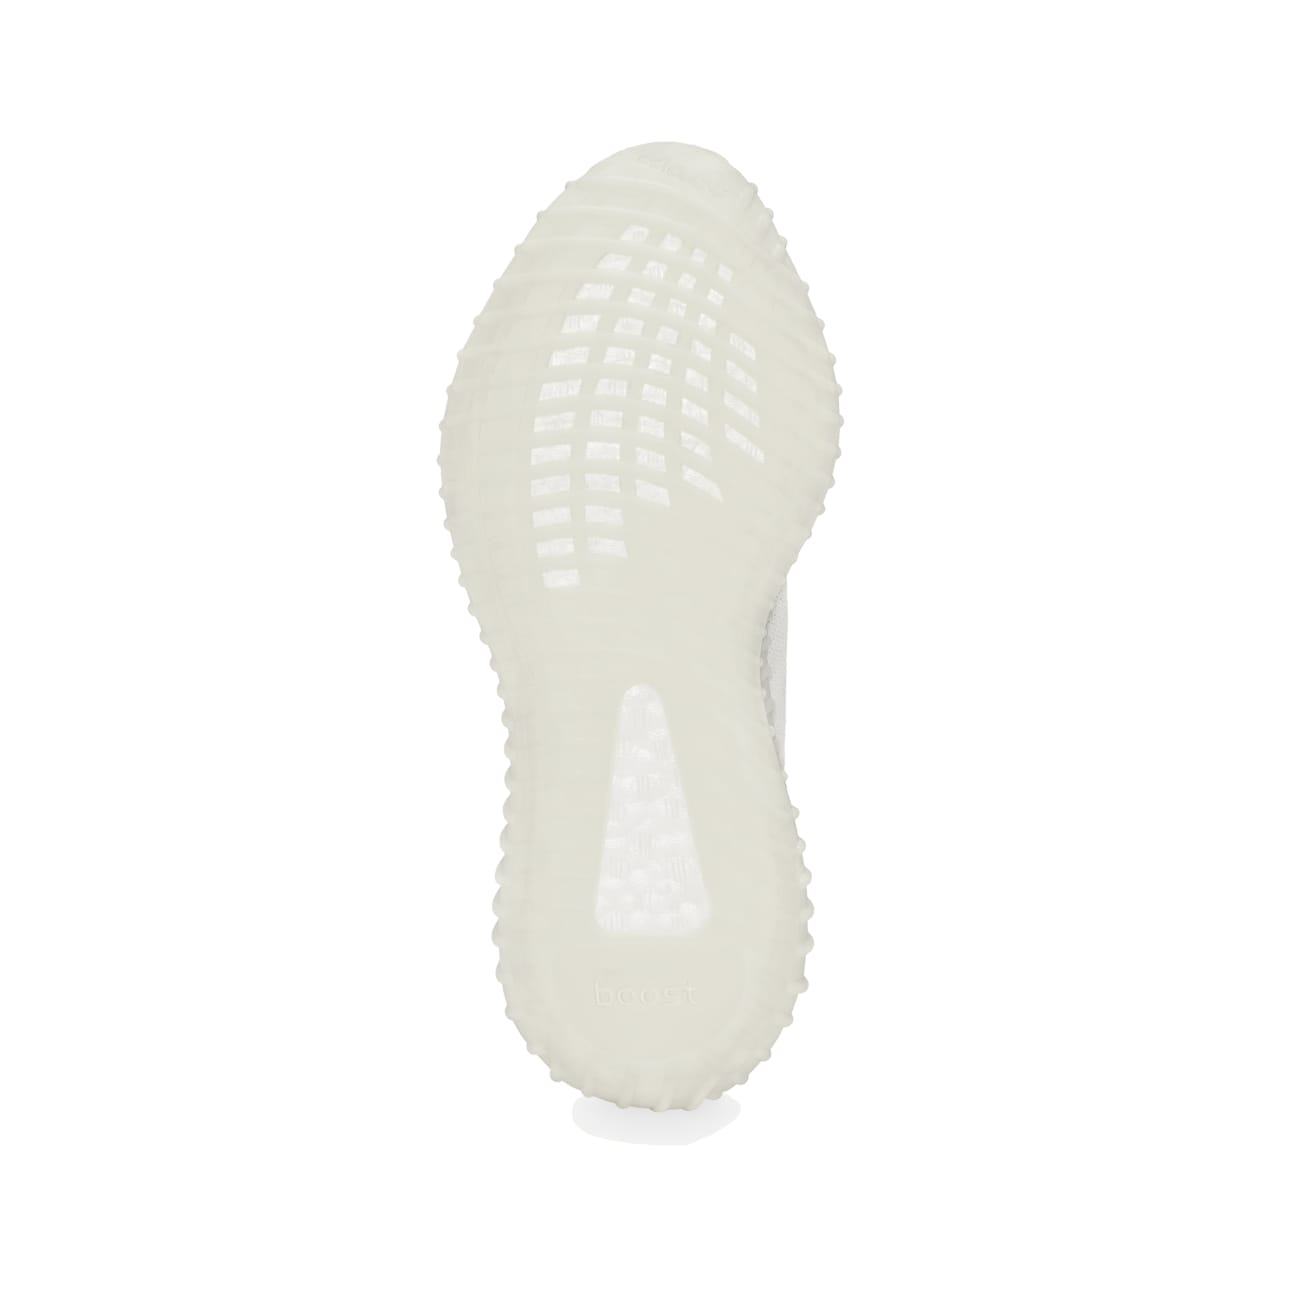 adidas Yeezy Boost 350 V2 "Bone" (Grey / White)  - Allike Store